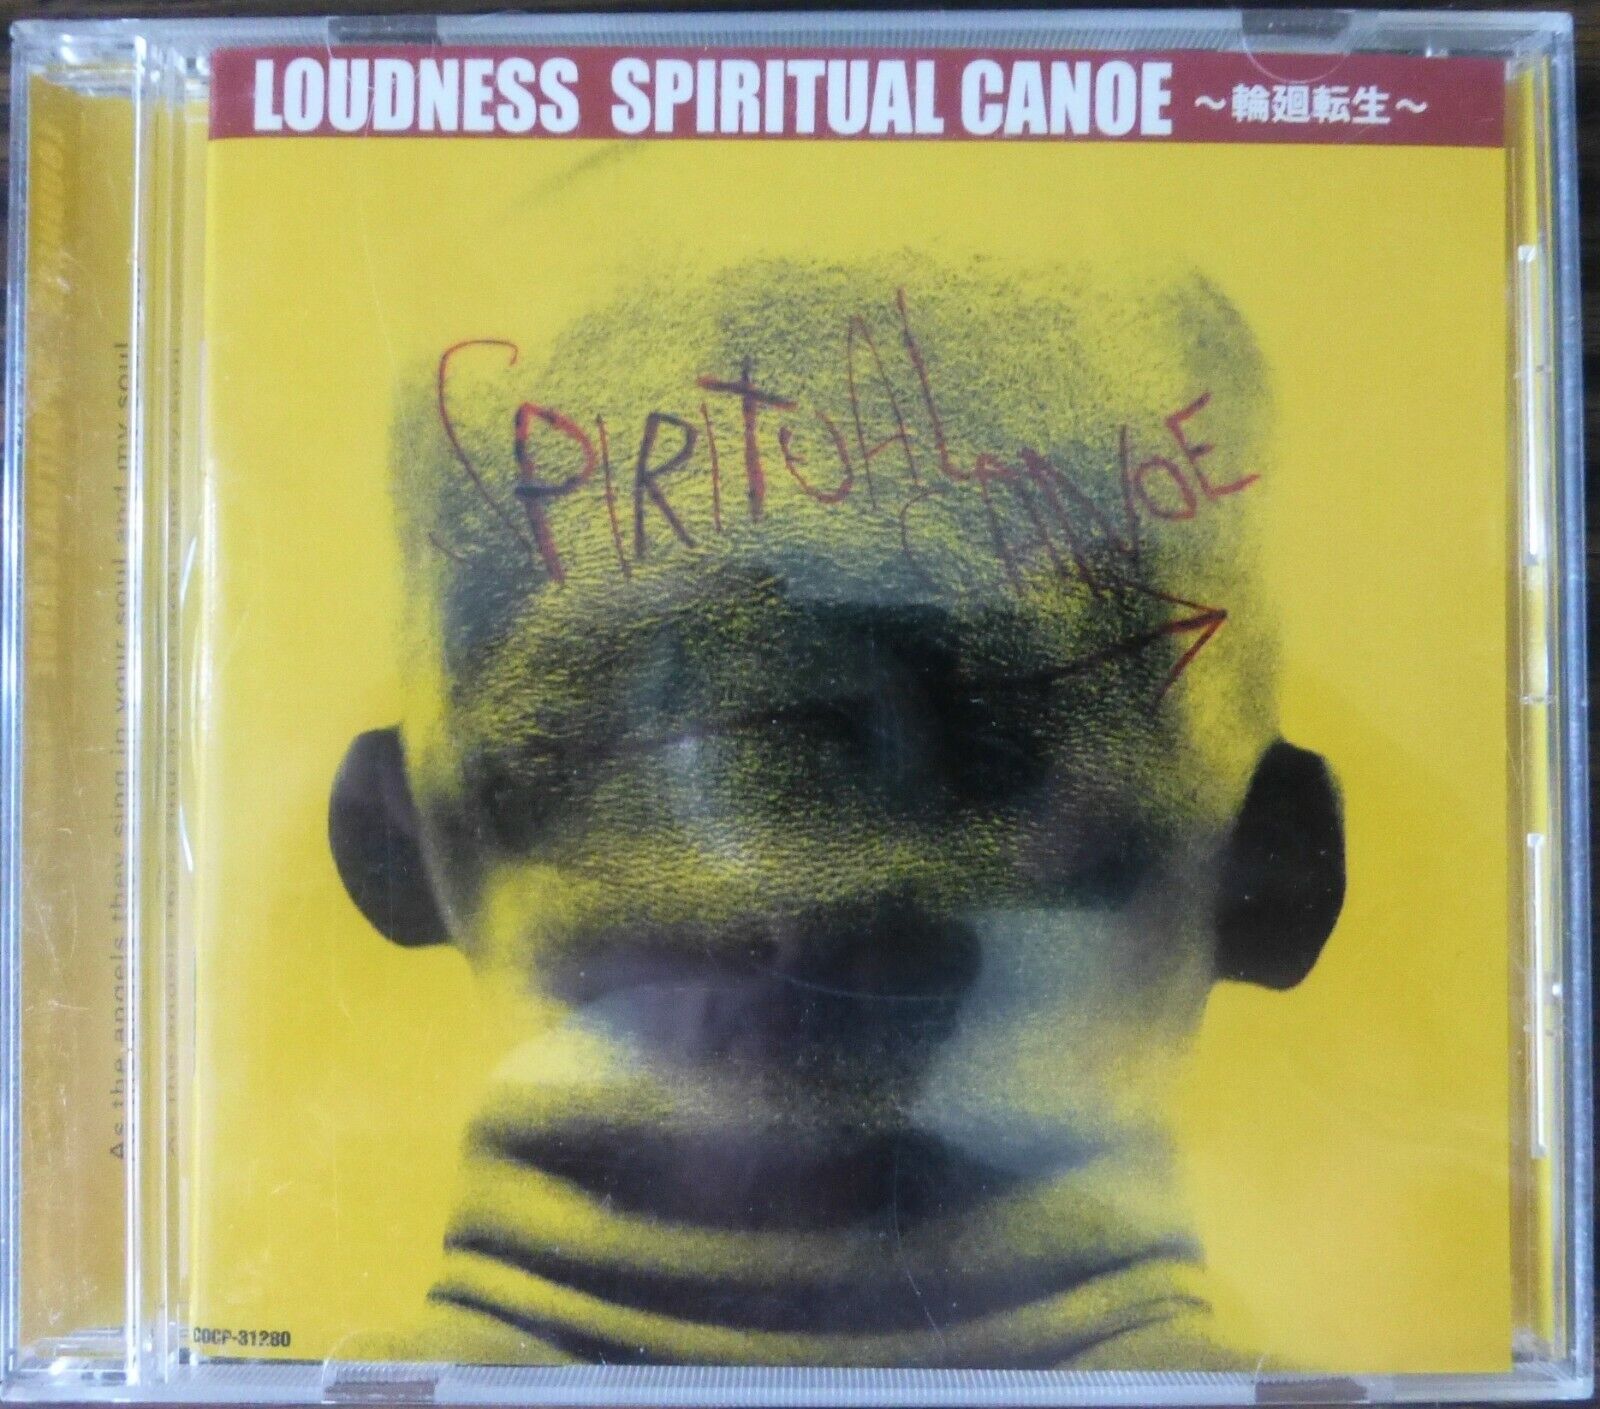 Loudness - Spiritual Canoe CD, 2001 Japanese import